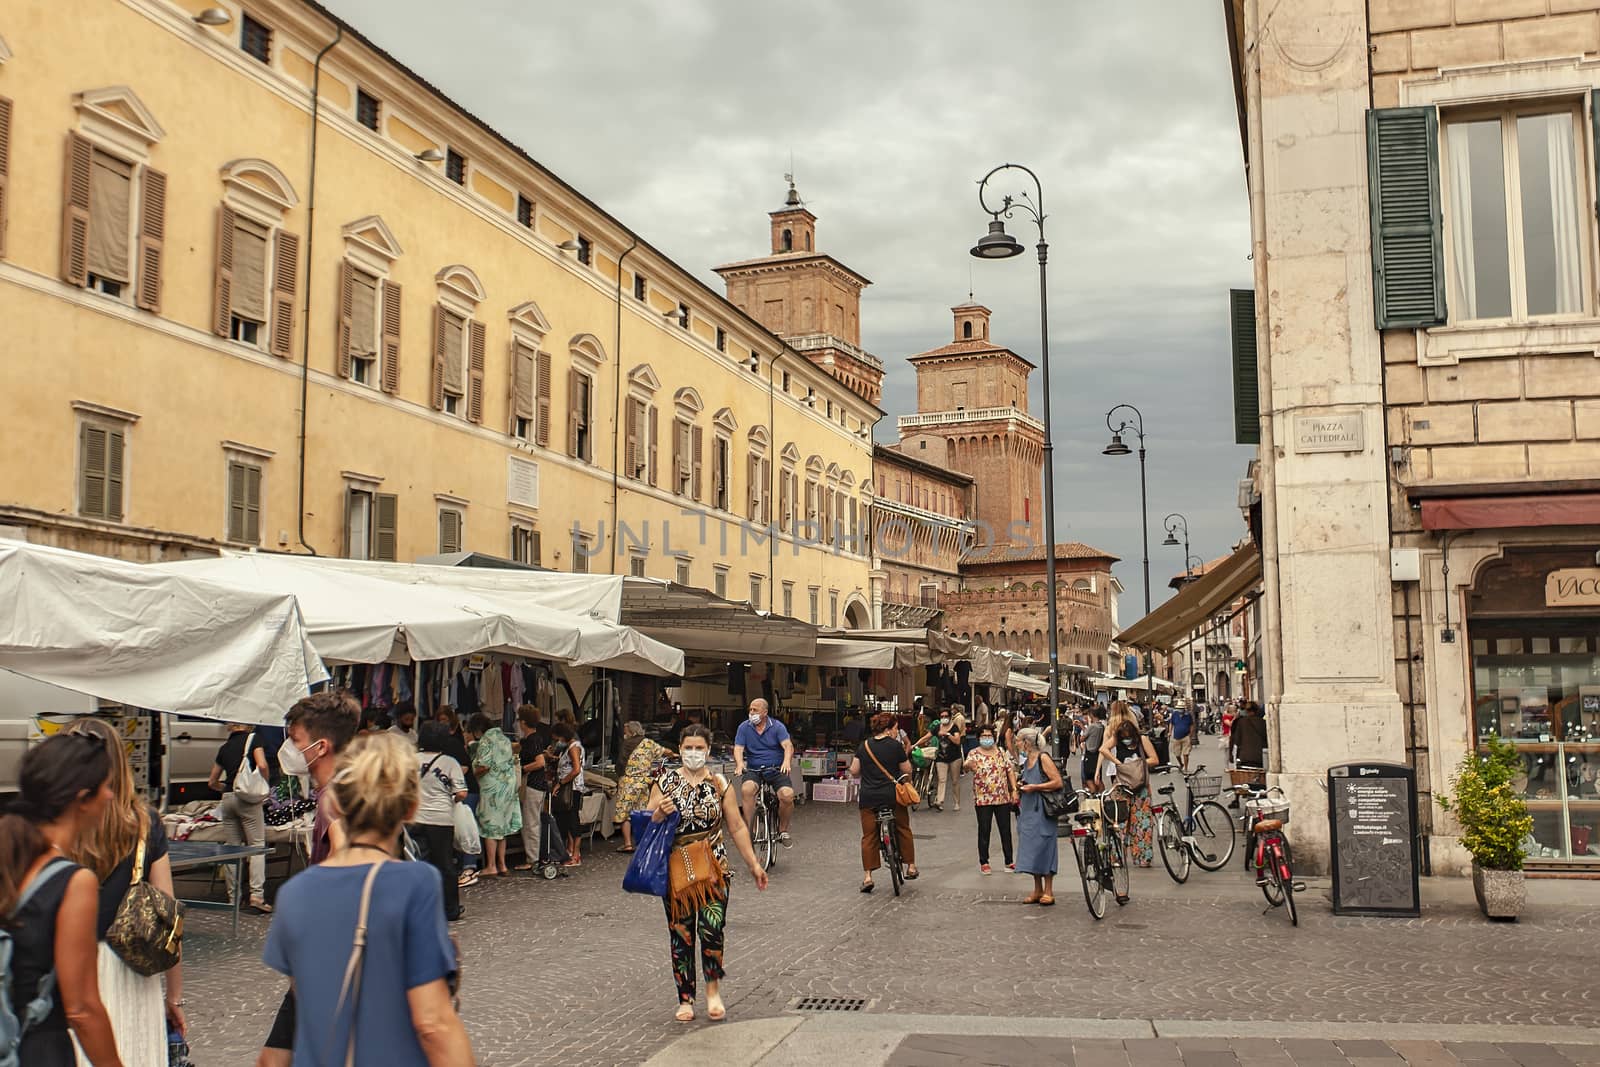 FERRARA, ITALY 29 JULY 2020 : Piazza del municipio in Ferrara in Italy a famous square in the city full of people